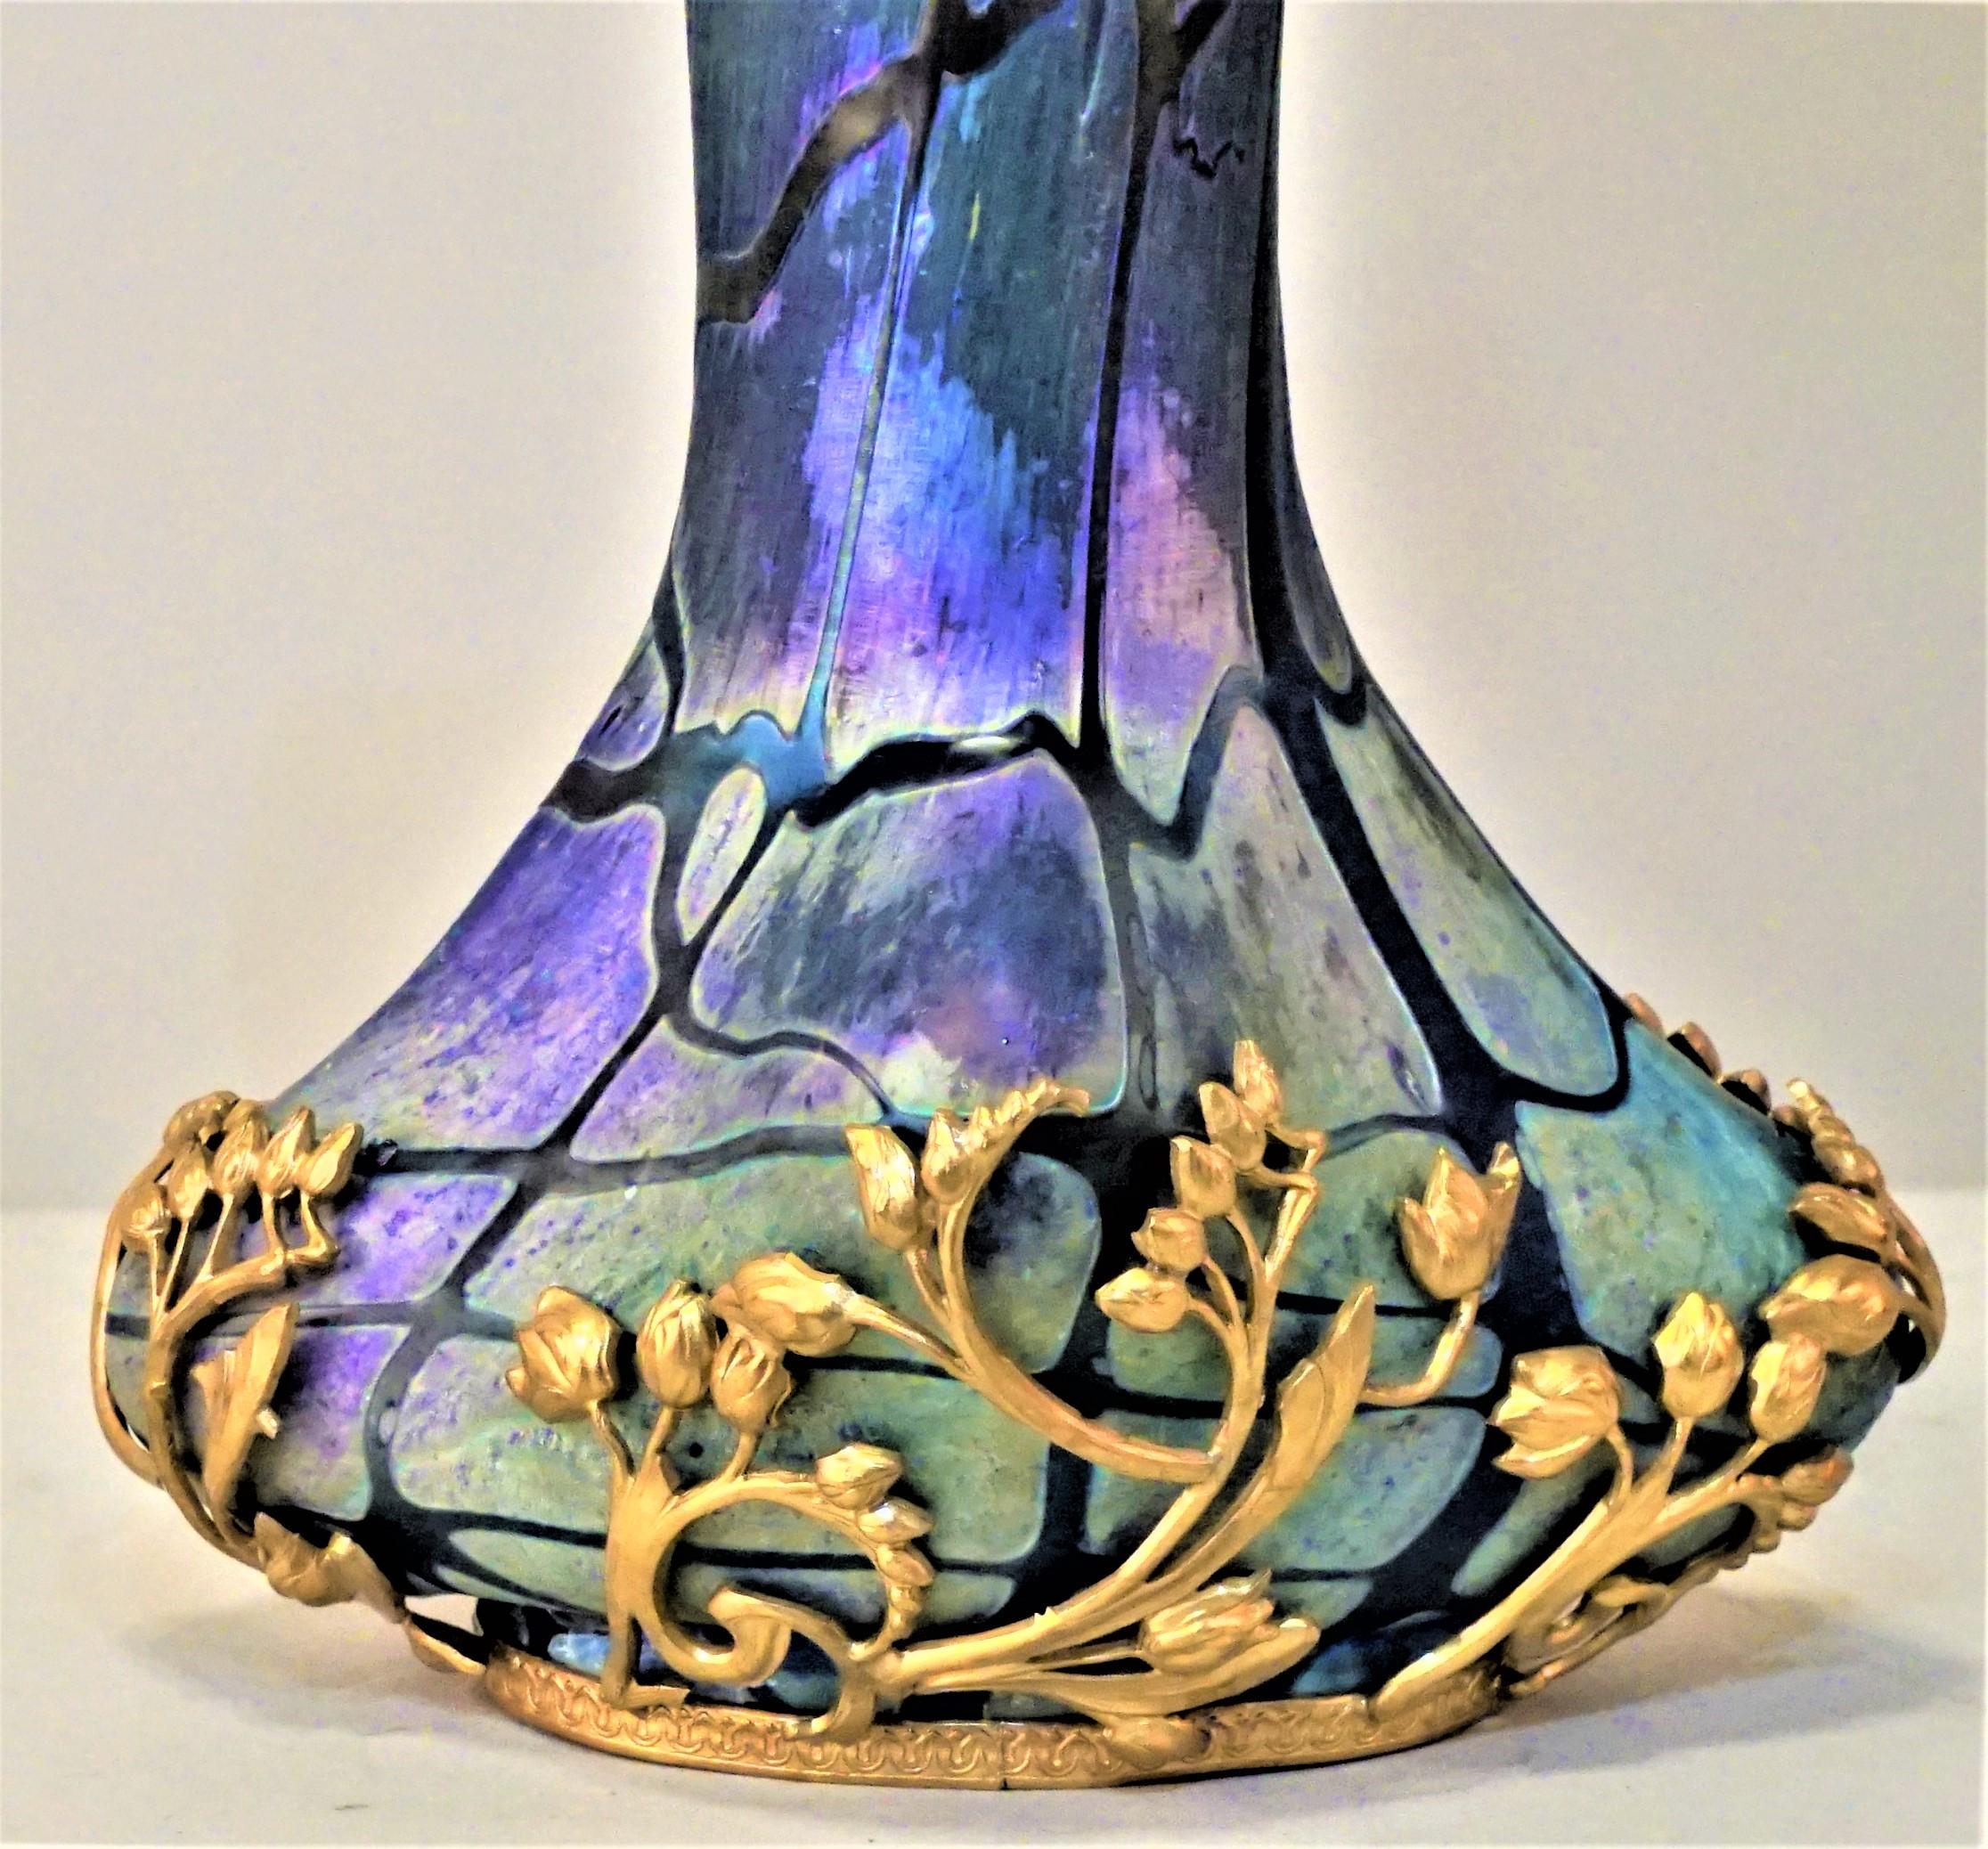 Hand blown art glass with bronze decoration.